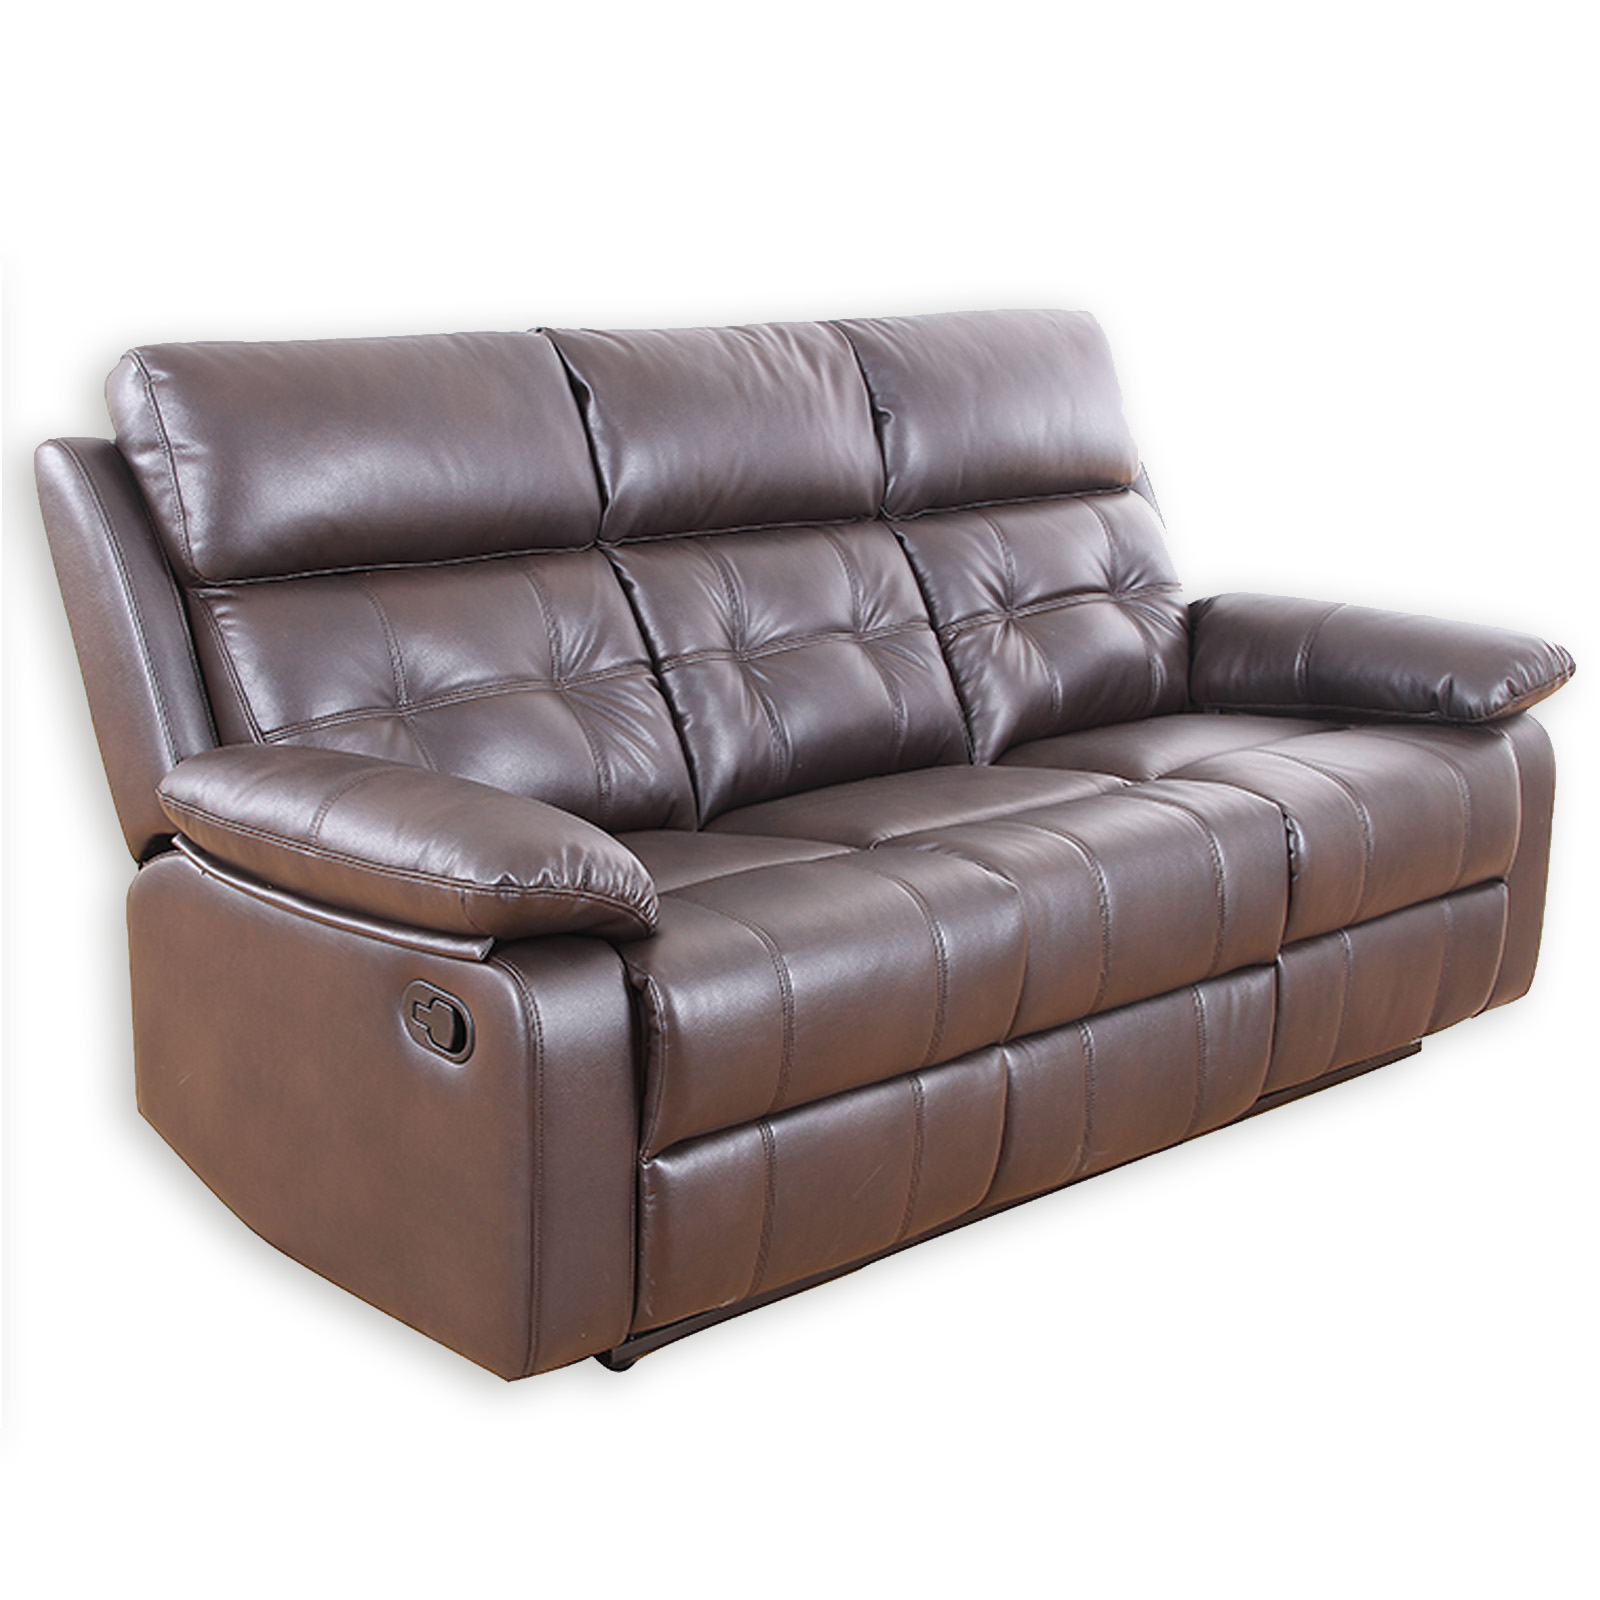 3-Sitzer Sofa - dunkelbraun - Kunstleder - Relaxfunktion | Online bei ROLLER kaufen